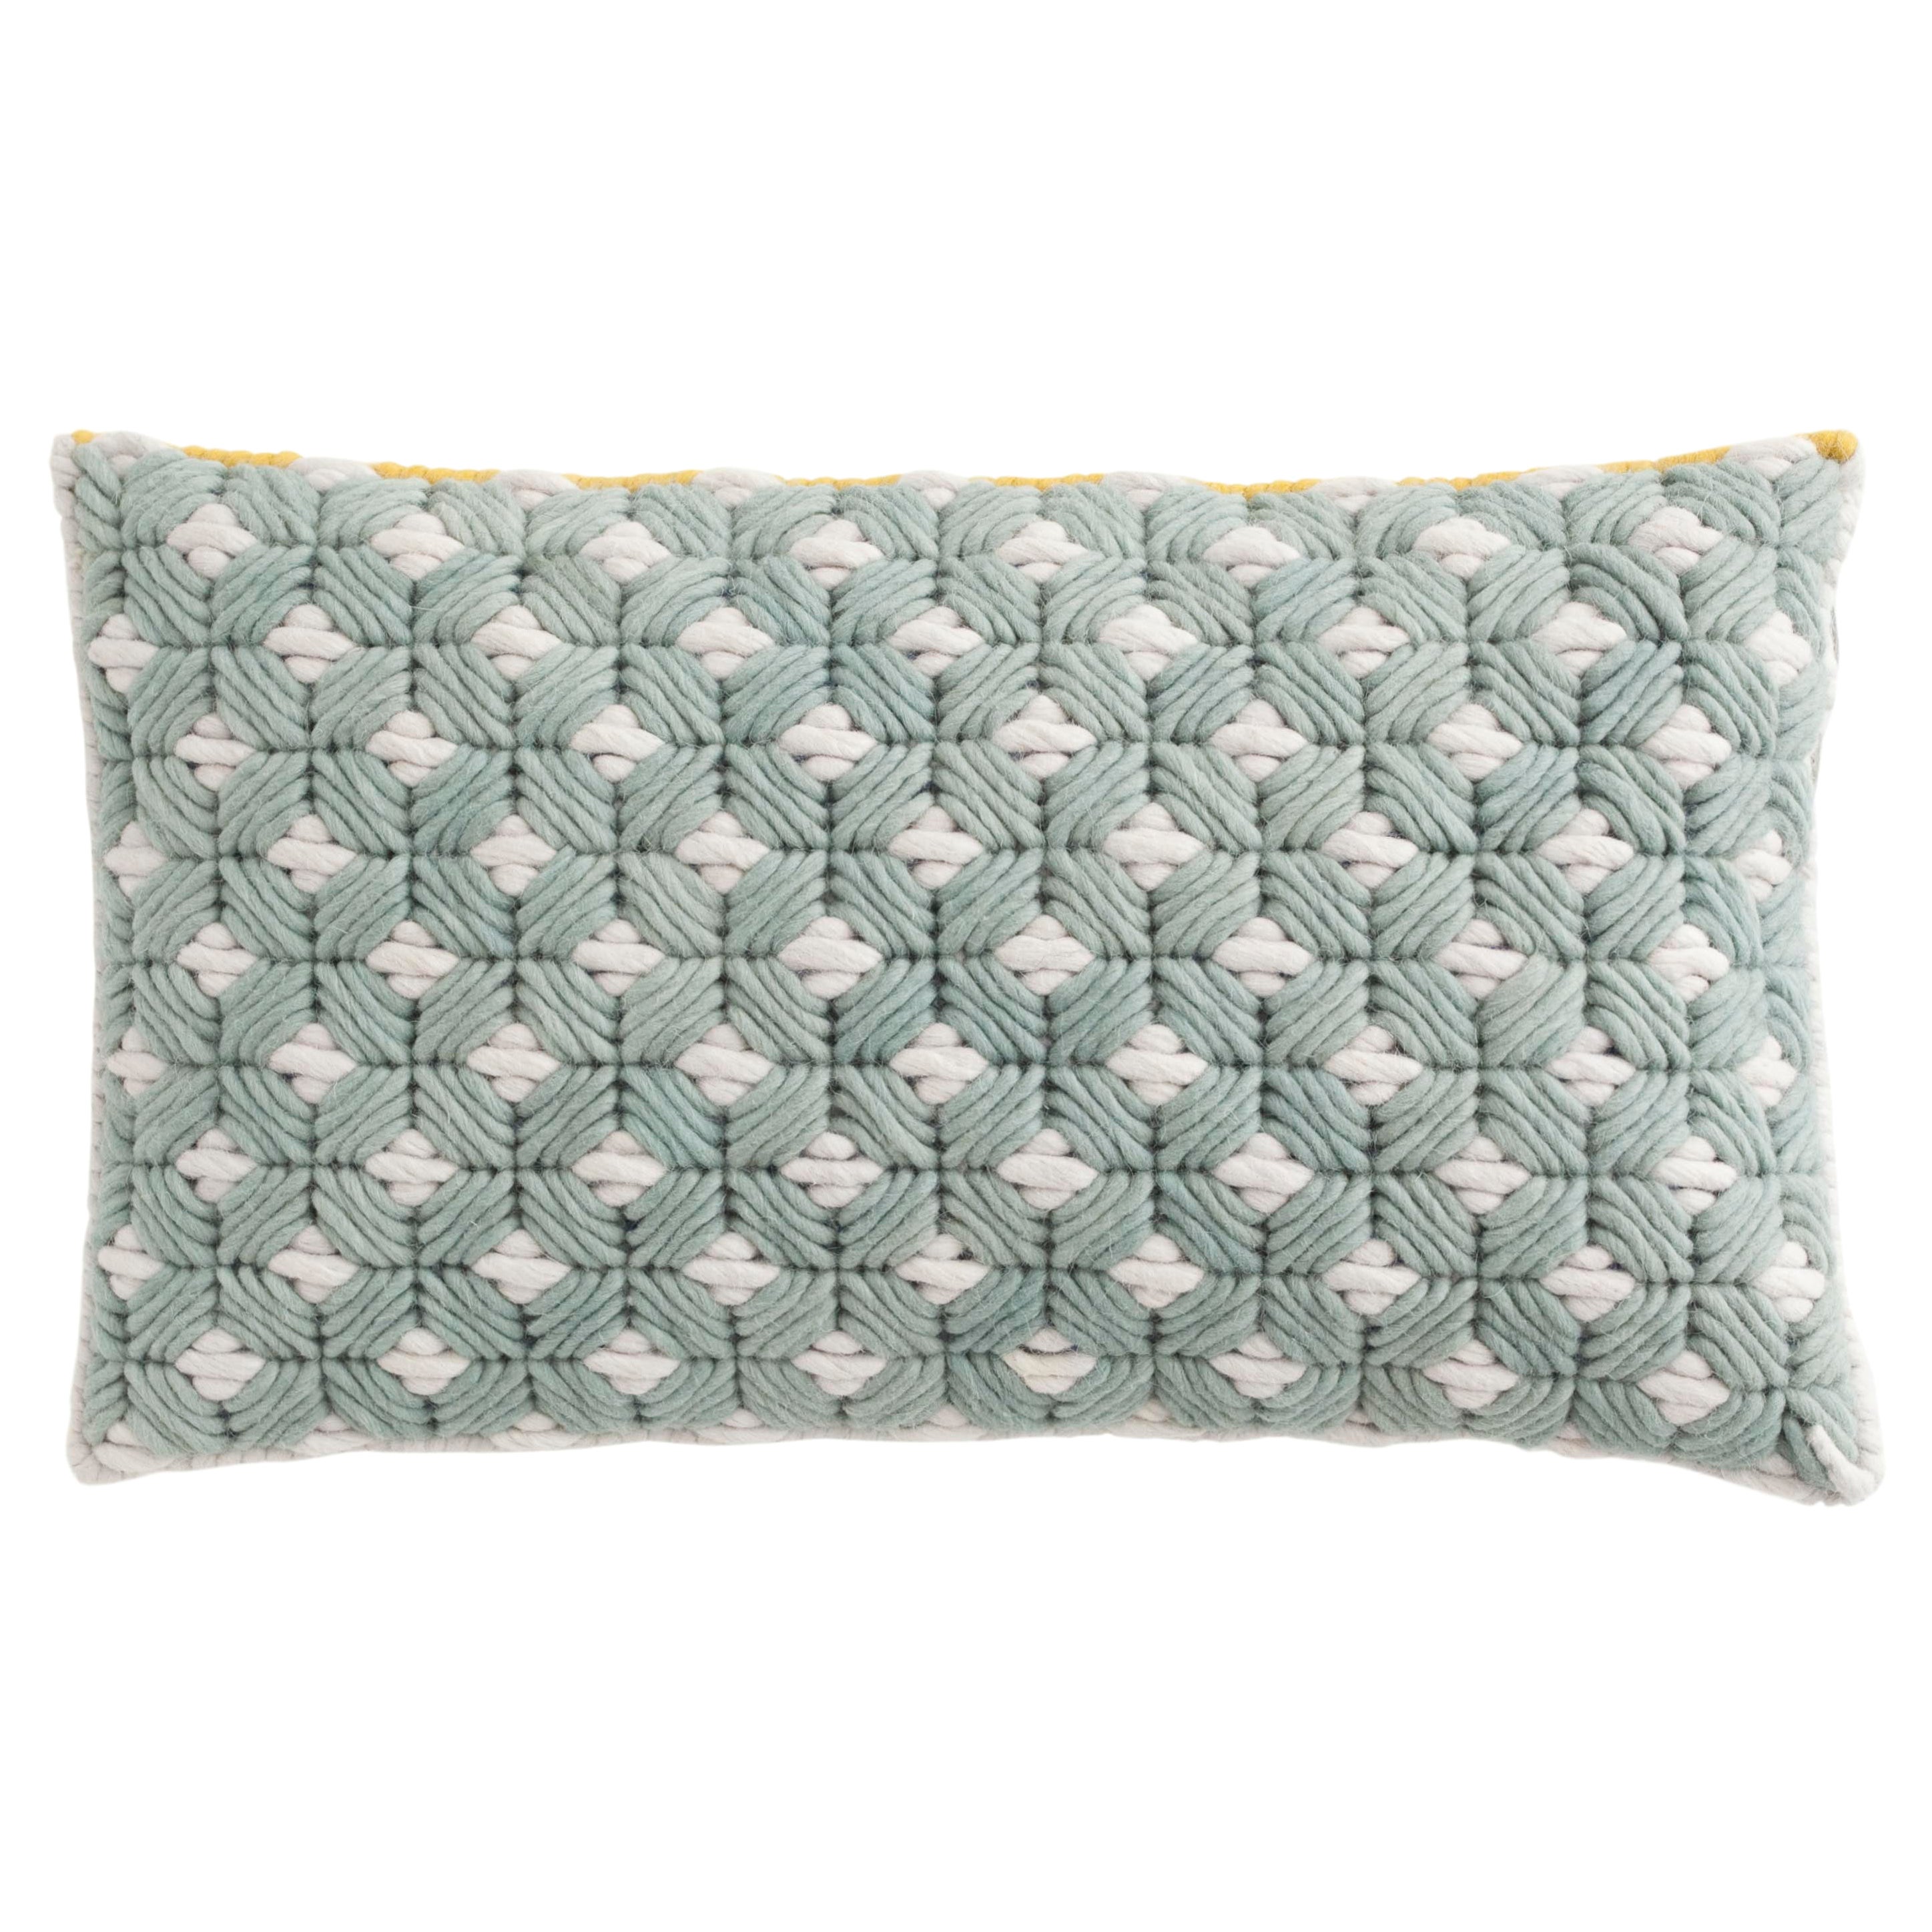 GAN Spaces Silaï Pillow in Celadon-Light Grey by Charlotte Lancelot For Sale